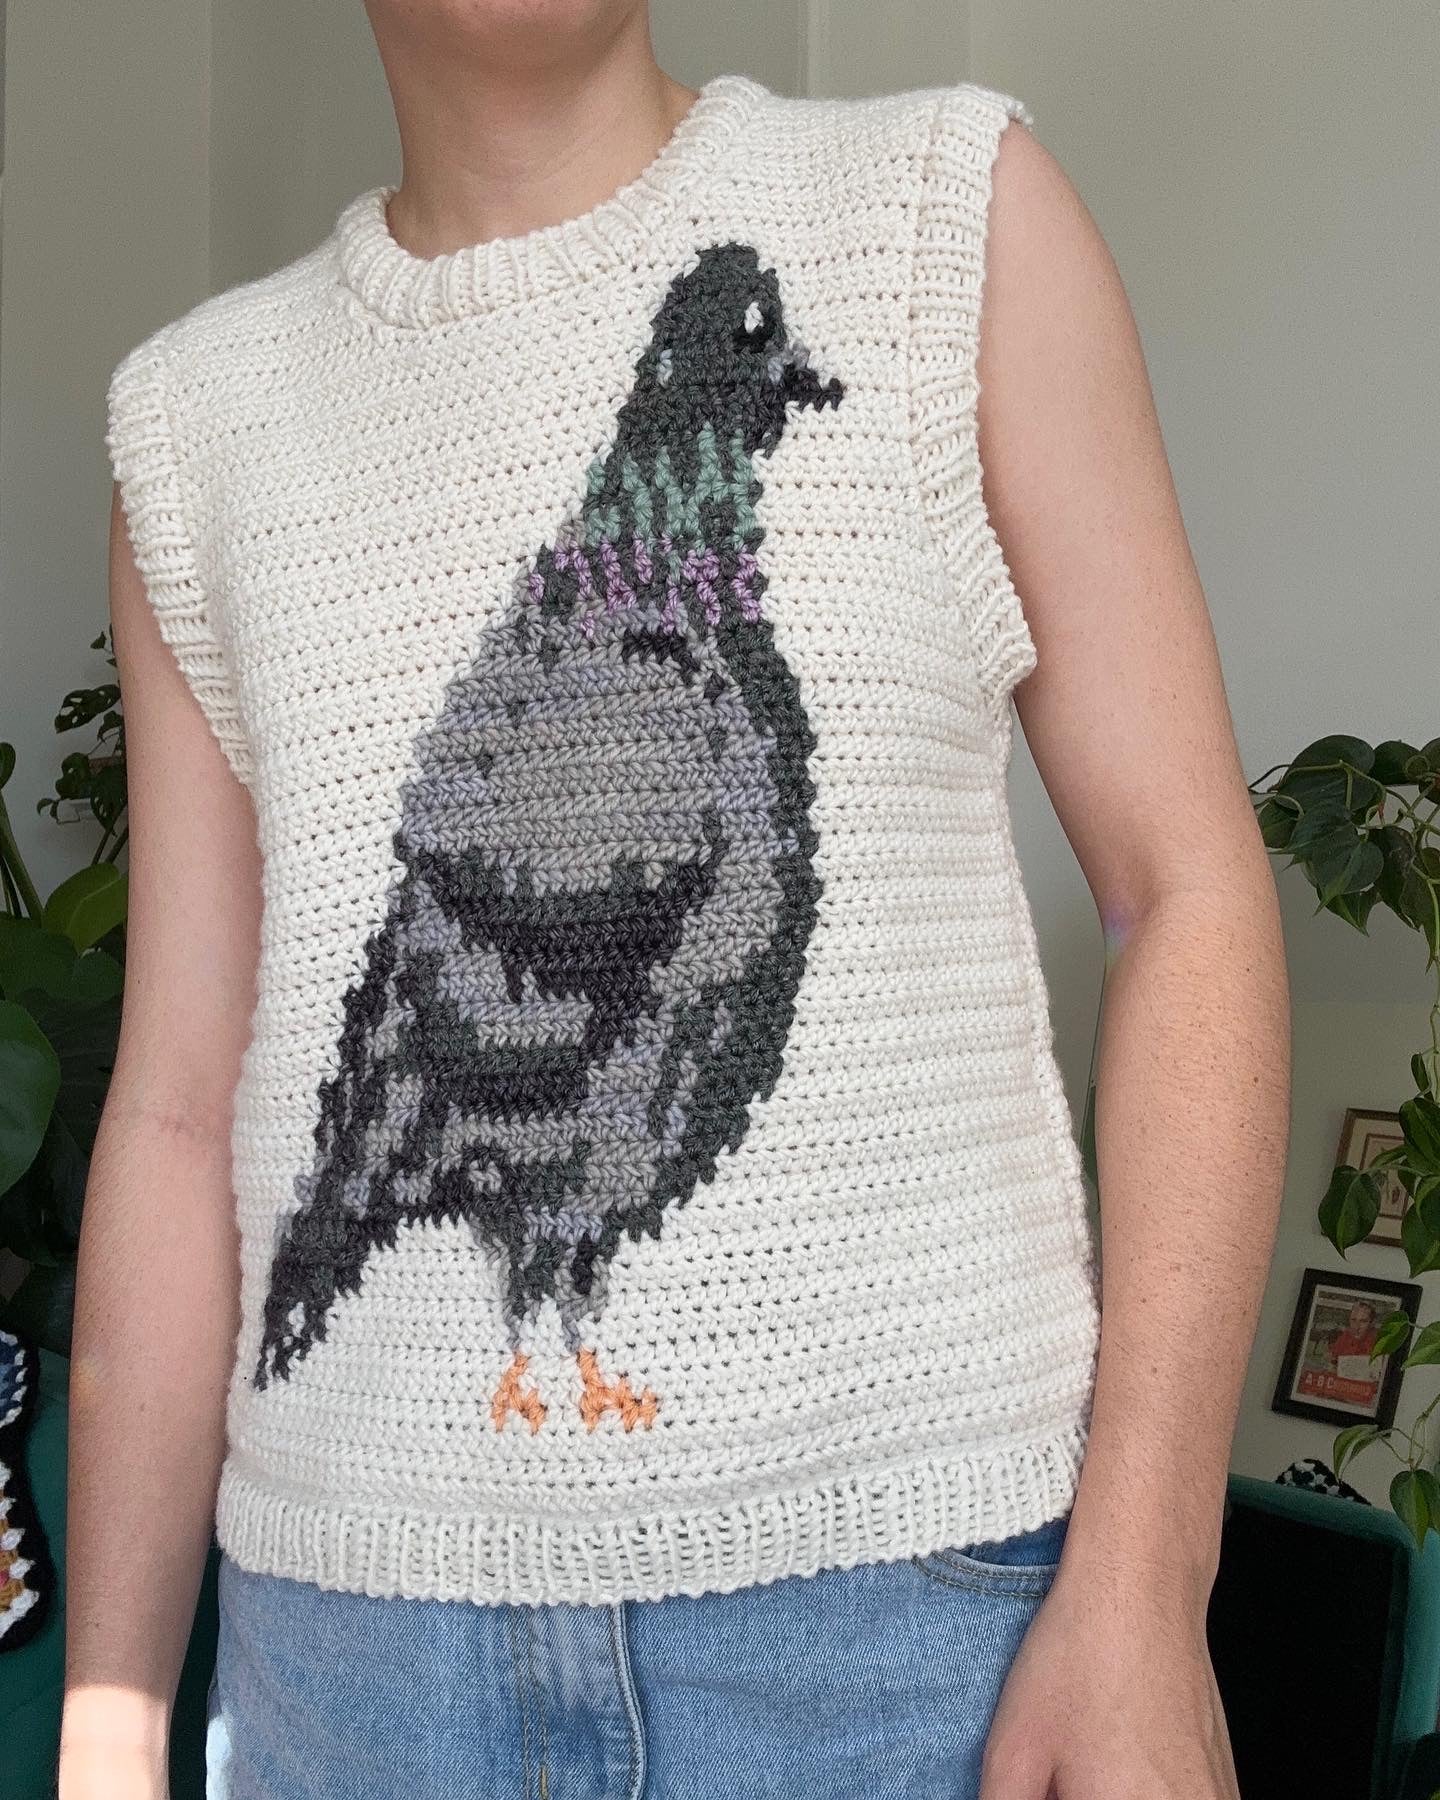 PDF: pigeon crochet chart (no pattern)